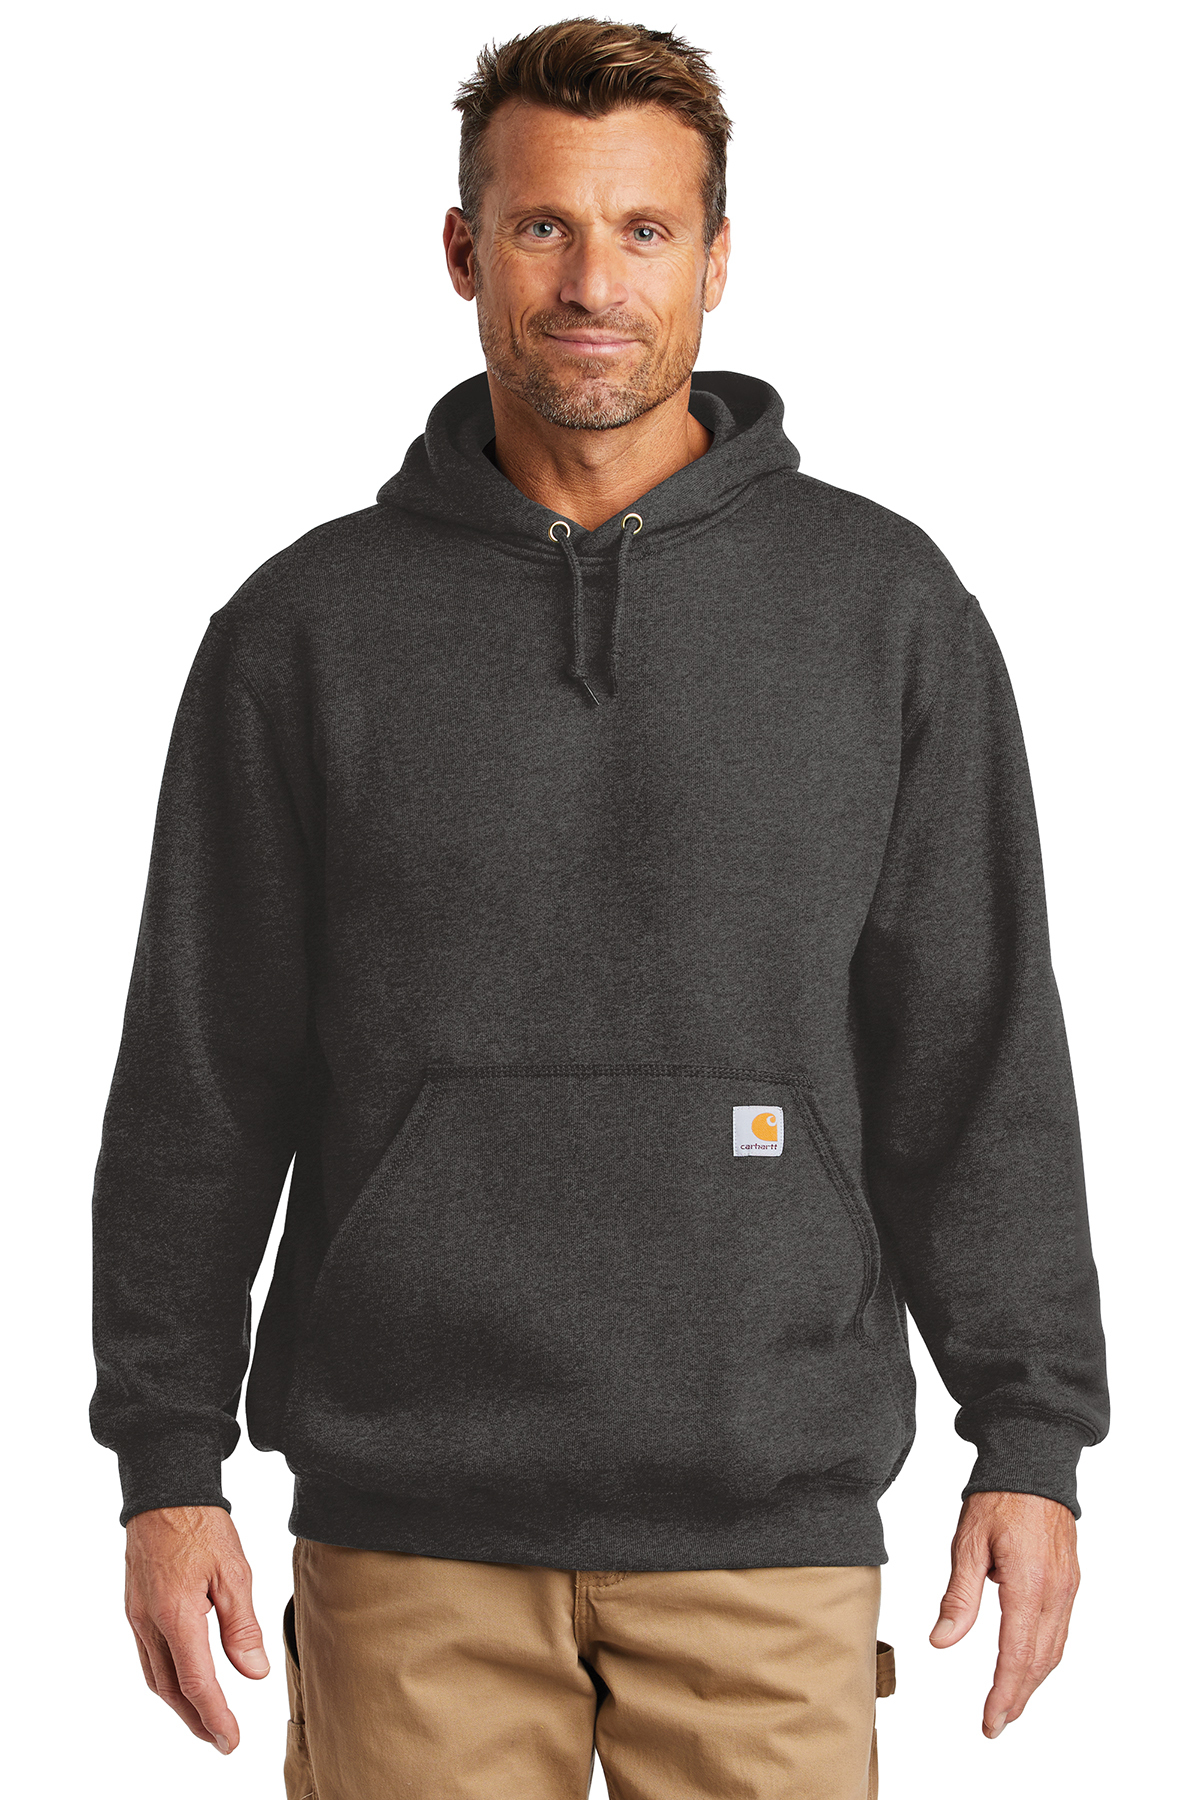 Carhartt Midweight Hooded Sweatshirt | Product | Online Apparel Market